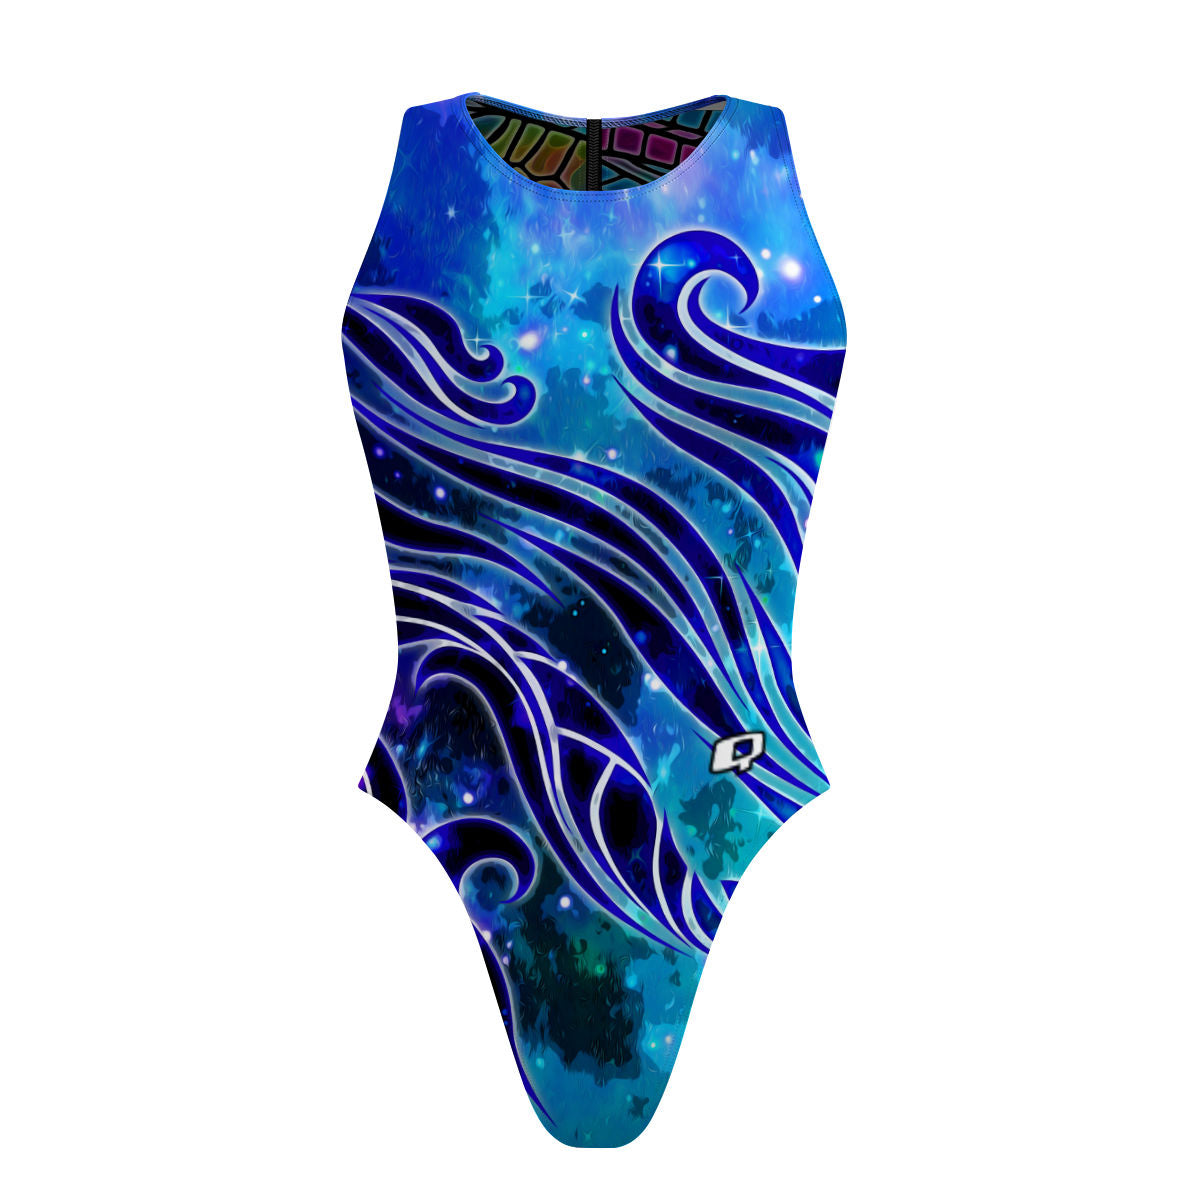 Mystic Waves/Dragonfly Wings - Women Waterpolo Reversible Swimsuit Cheeky Cut